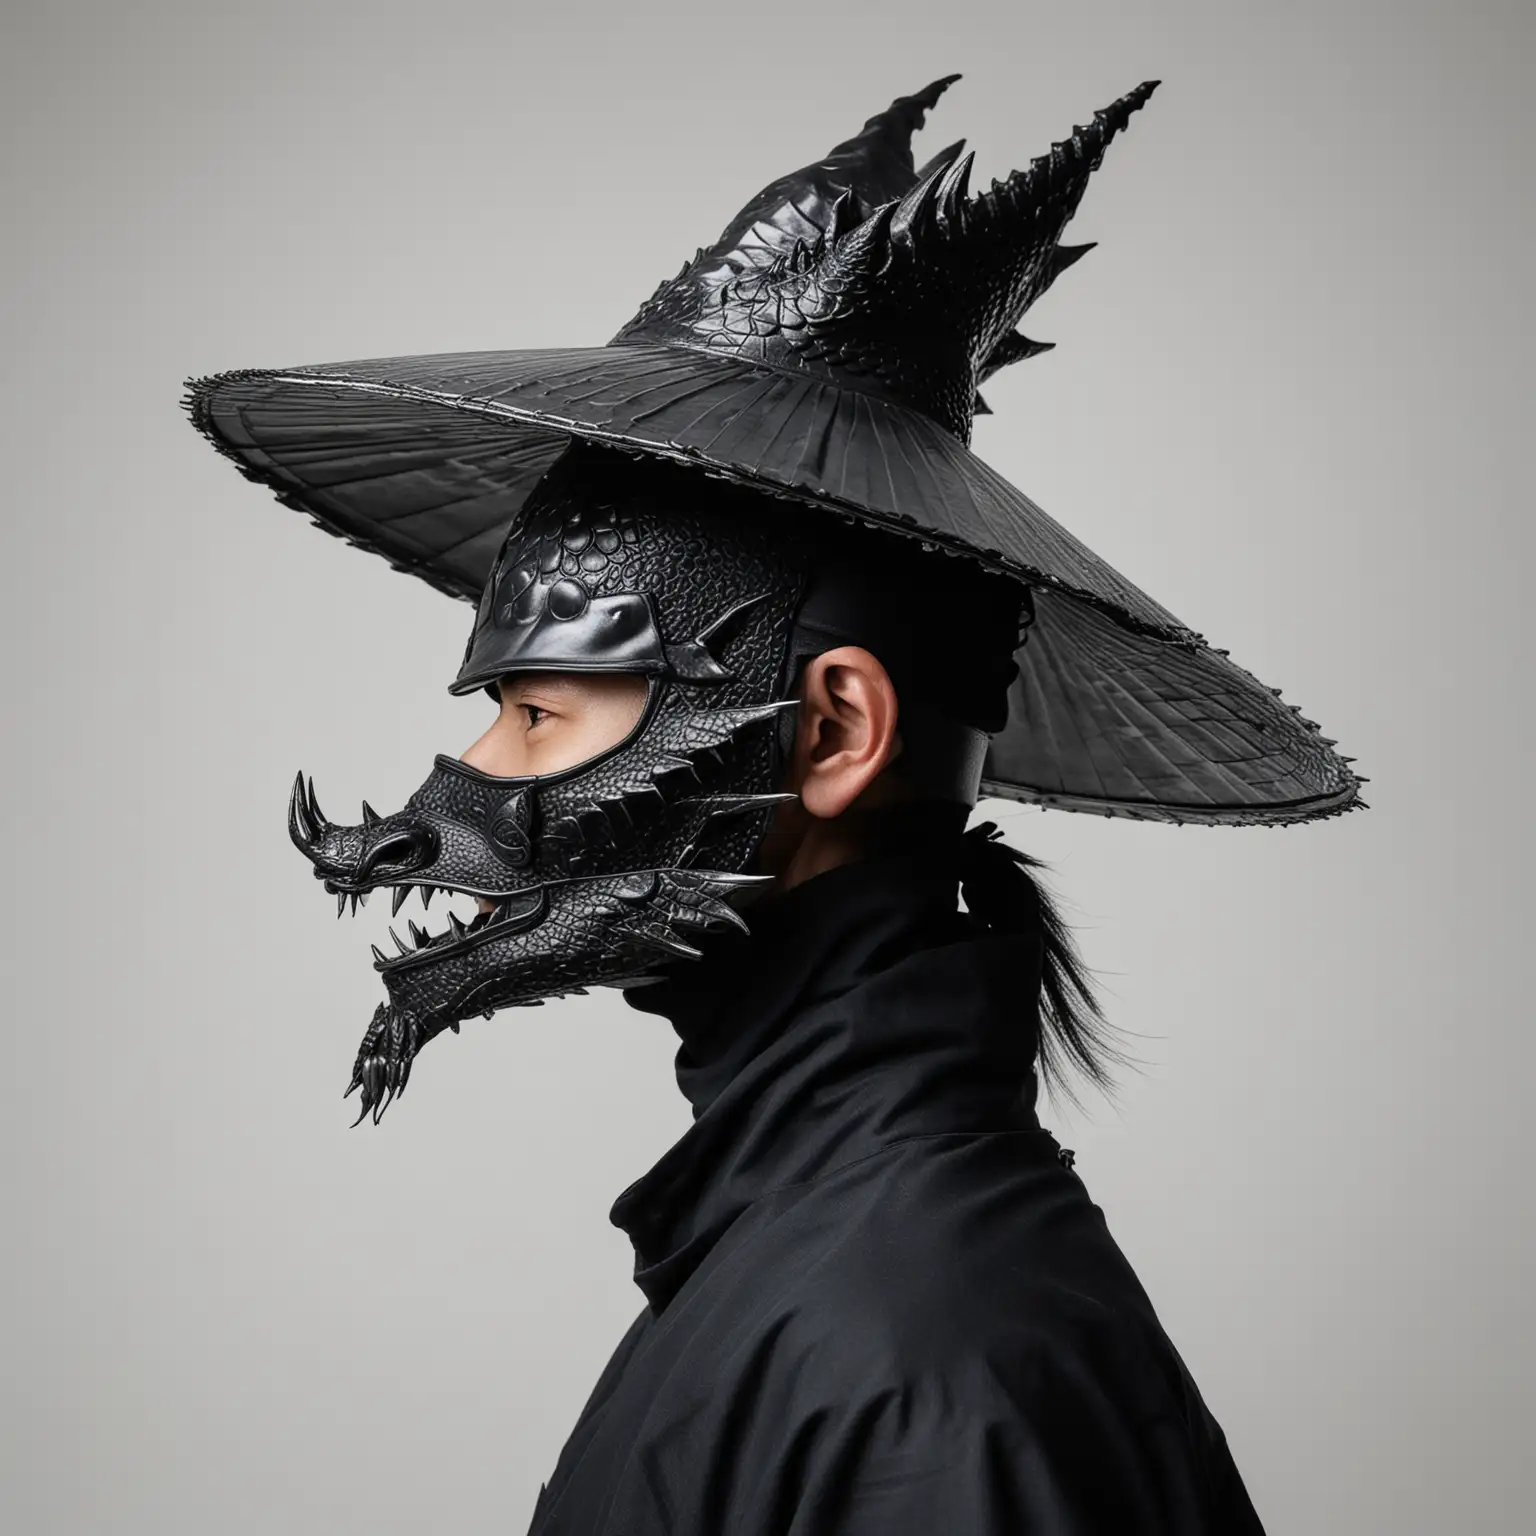 Portrait photograph, side-profile view, side view, Japanese man, black metal conical hat, metal dragon-ninja mask, black turtleneck, white background